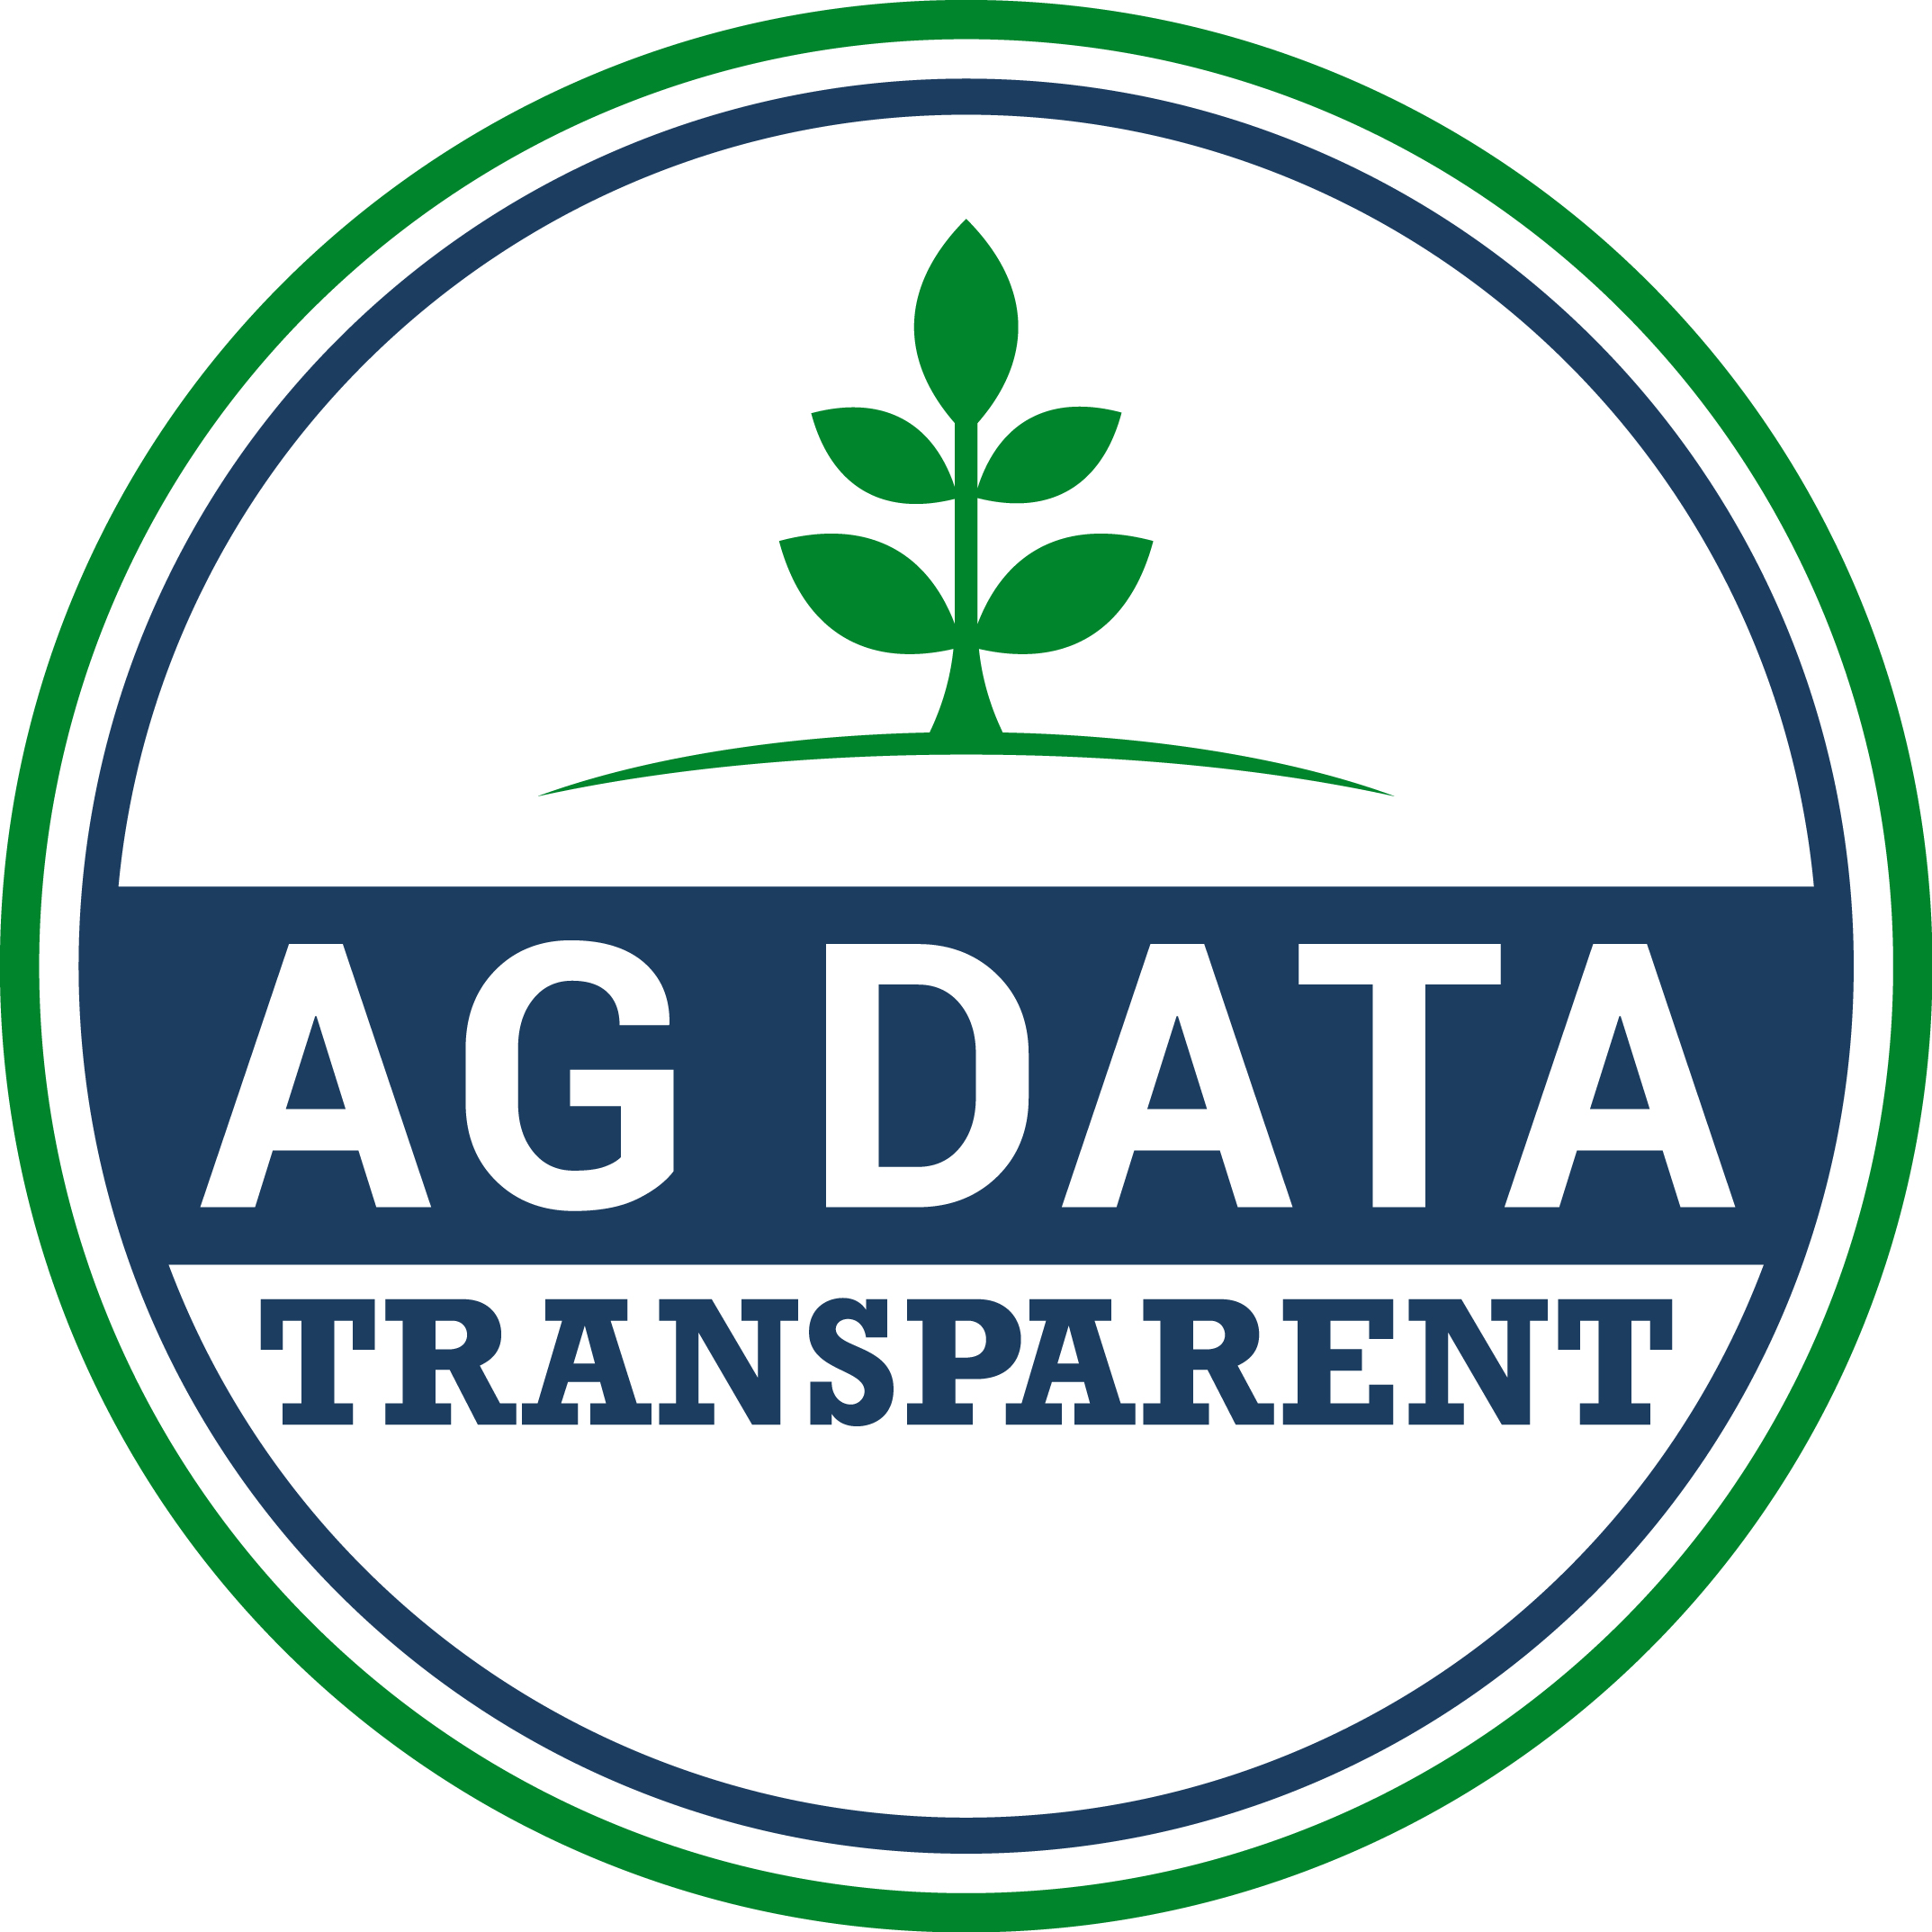 John Deere Receives Ag Data Transparent Seal of Approval Certification for Standard Compliance